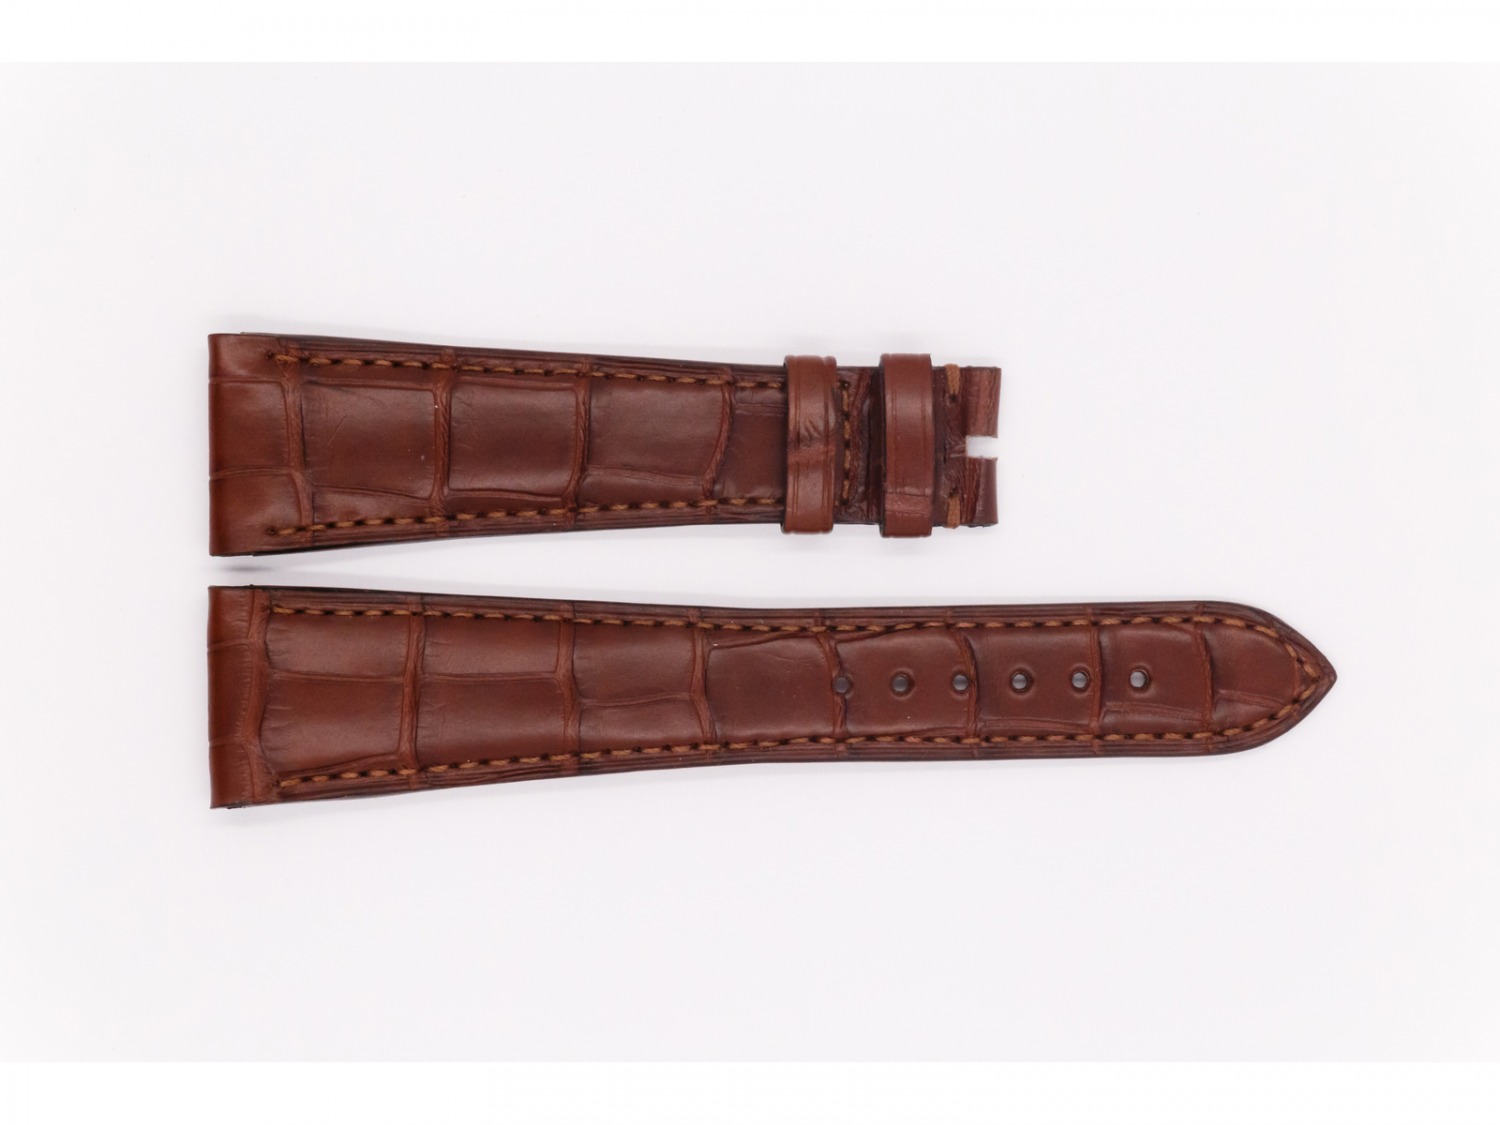 Leather Girard - Perregaux Strap, brown